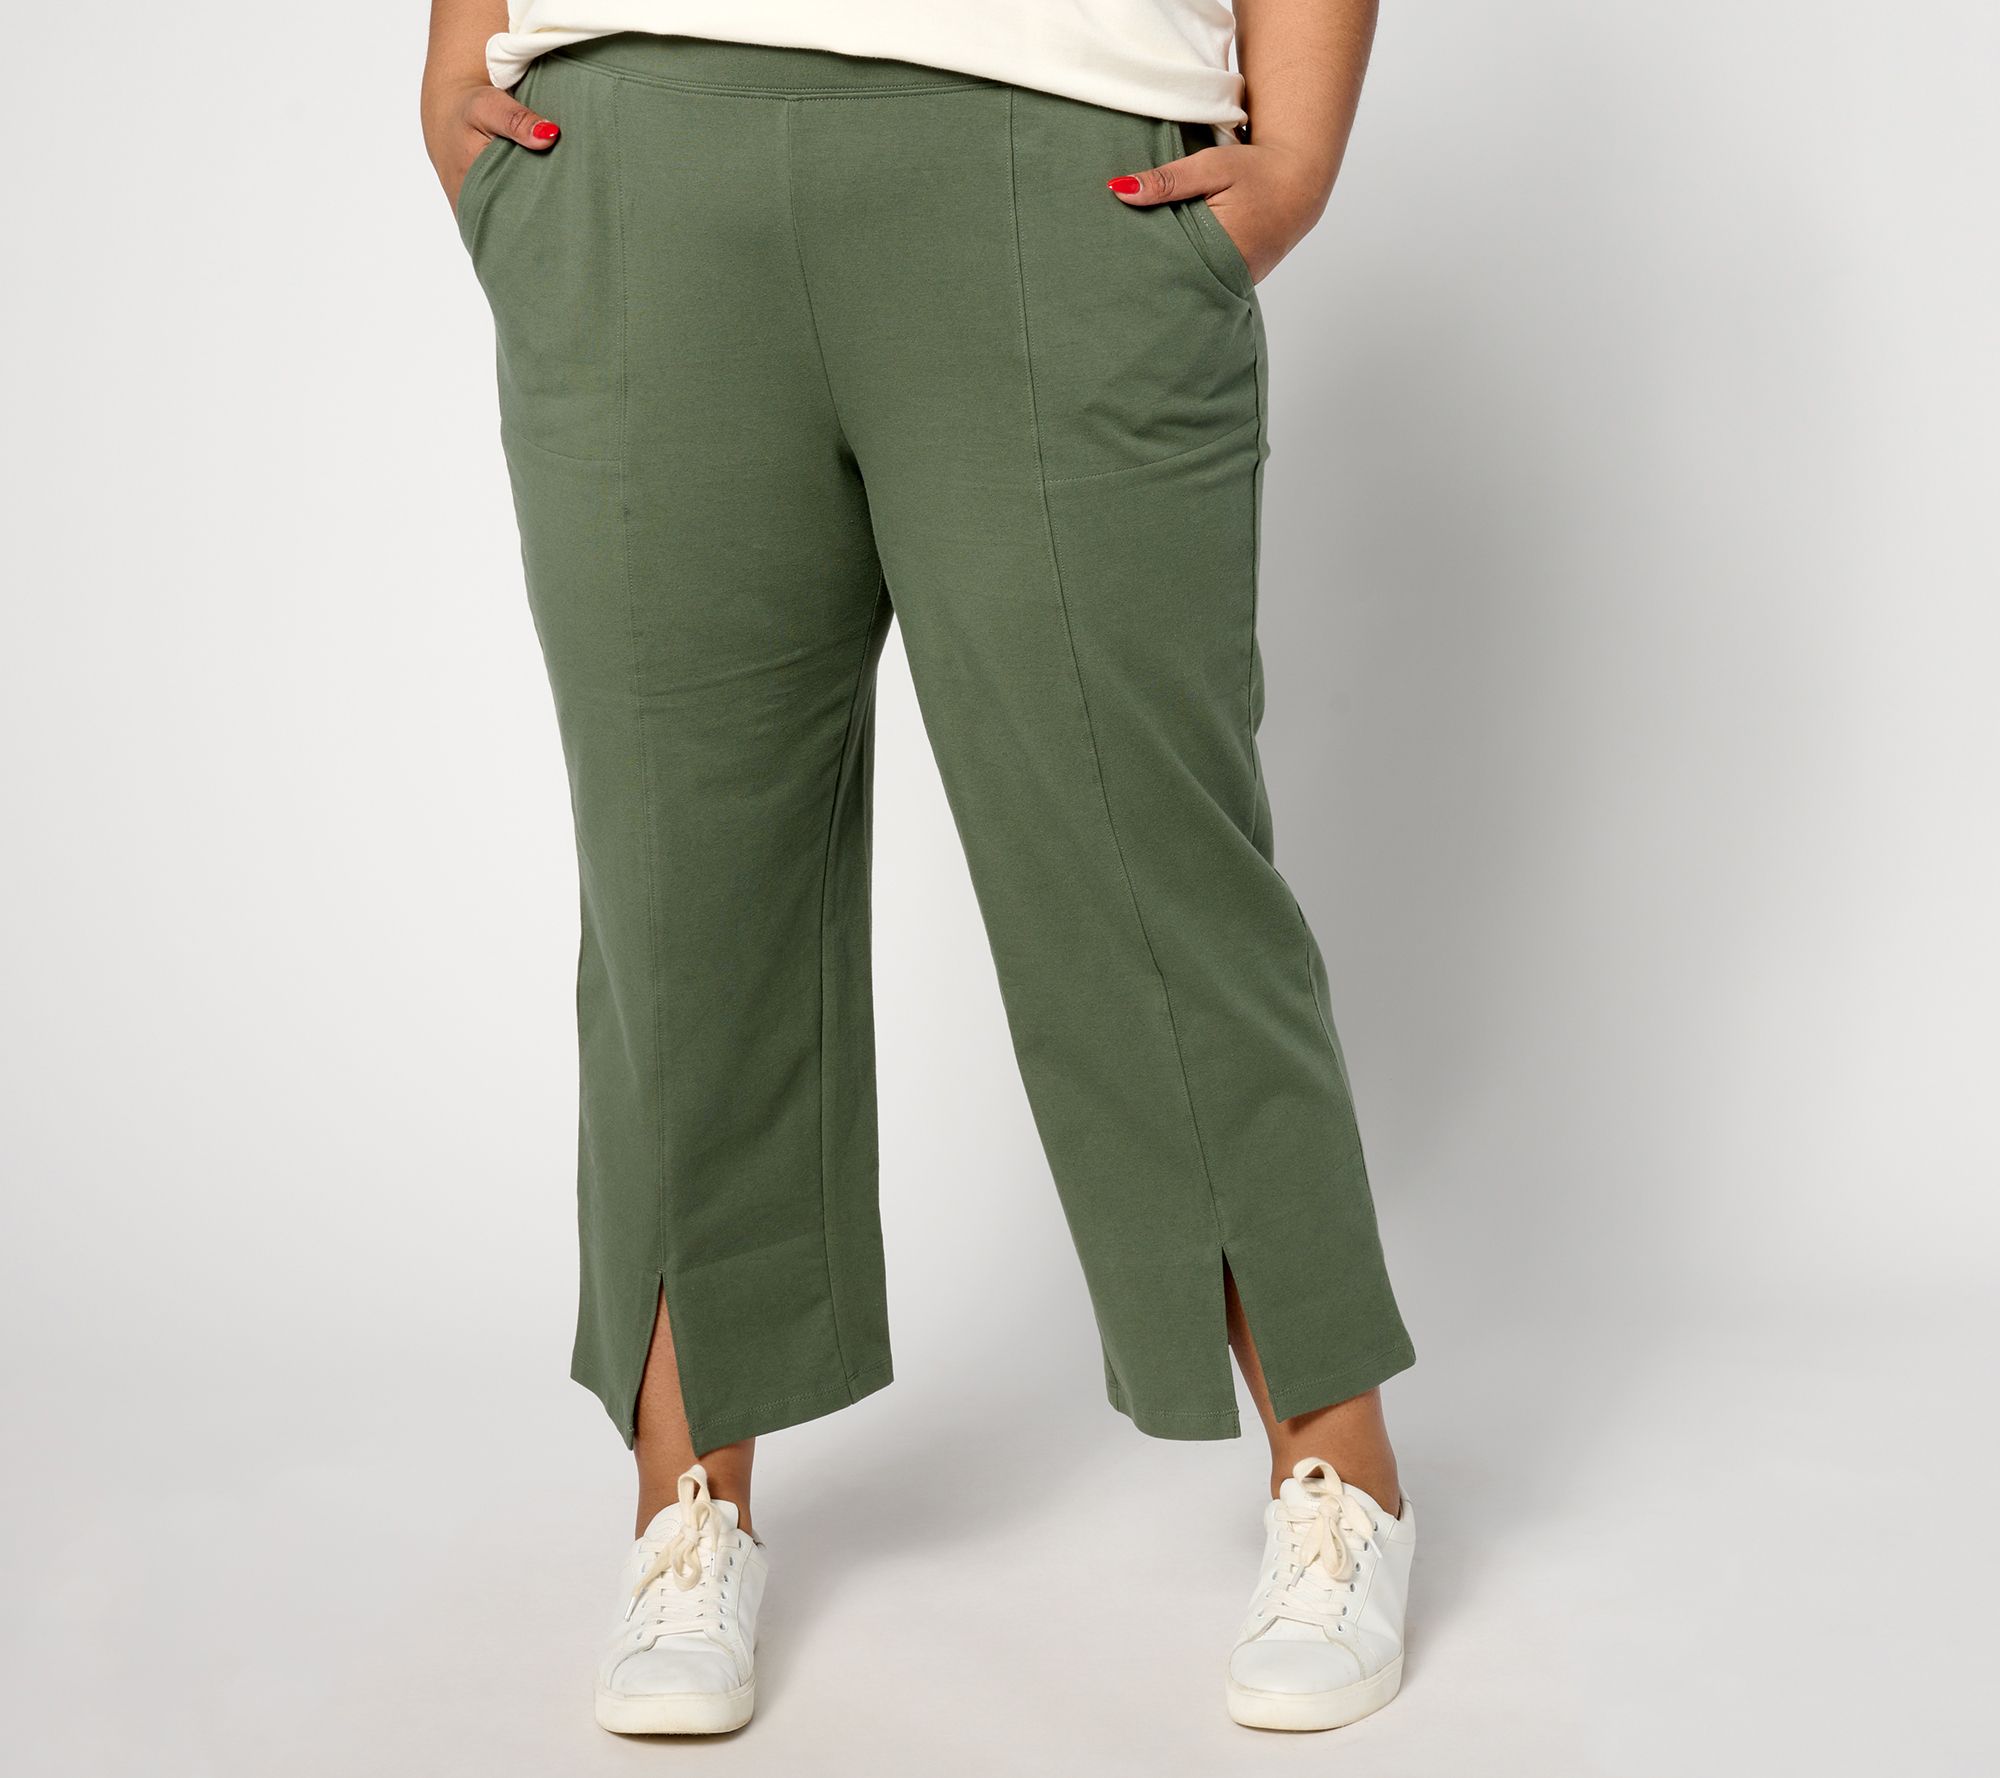 Denim & Co. Original Waist Stretch Tall Side Pocket Pants - Core